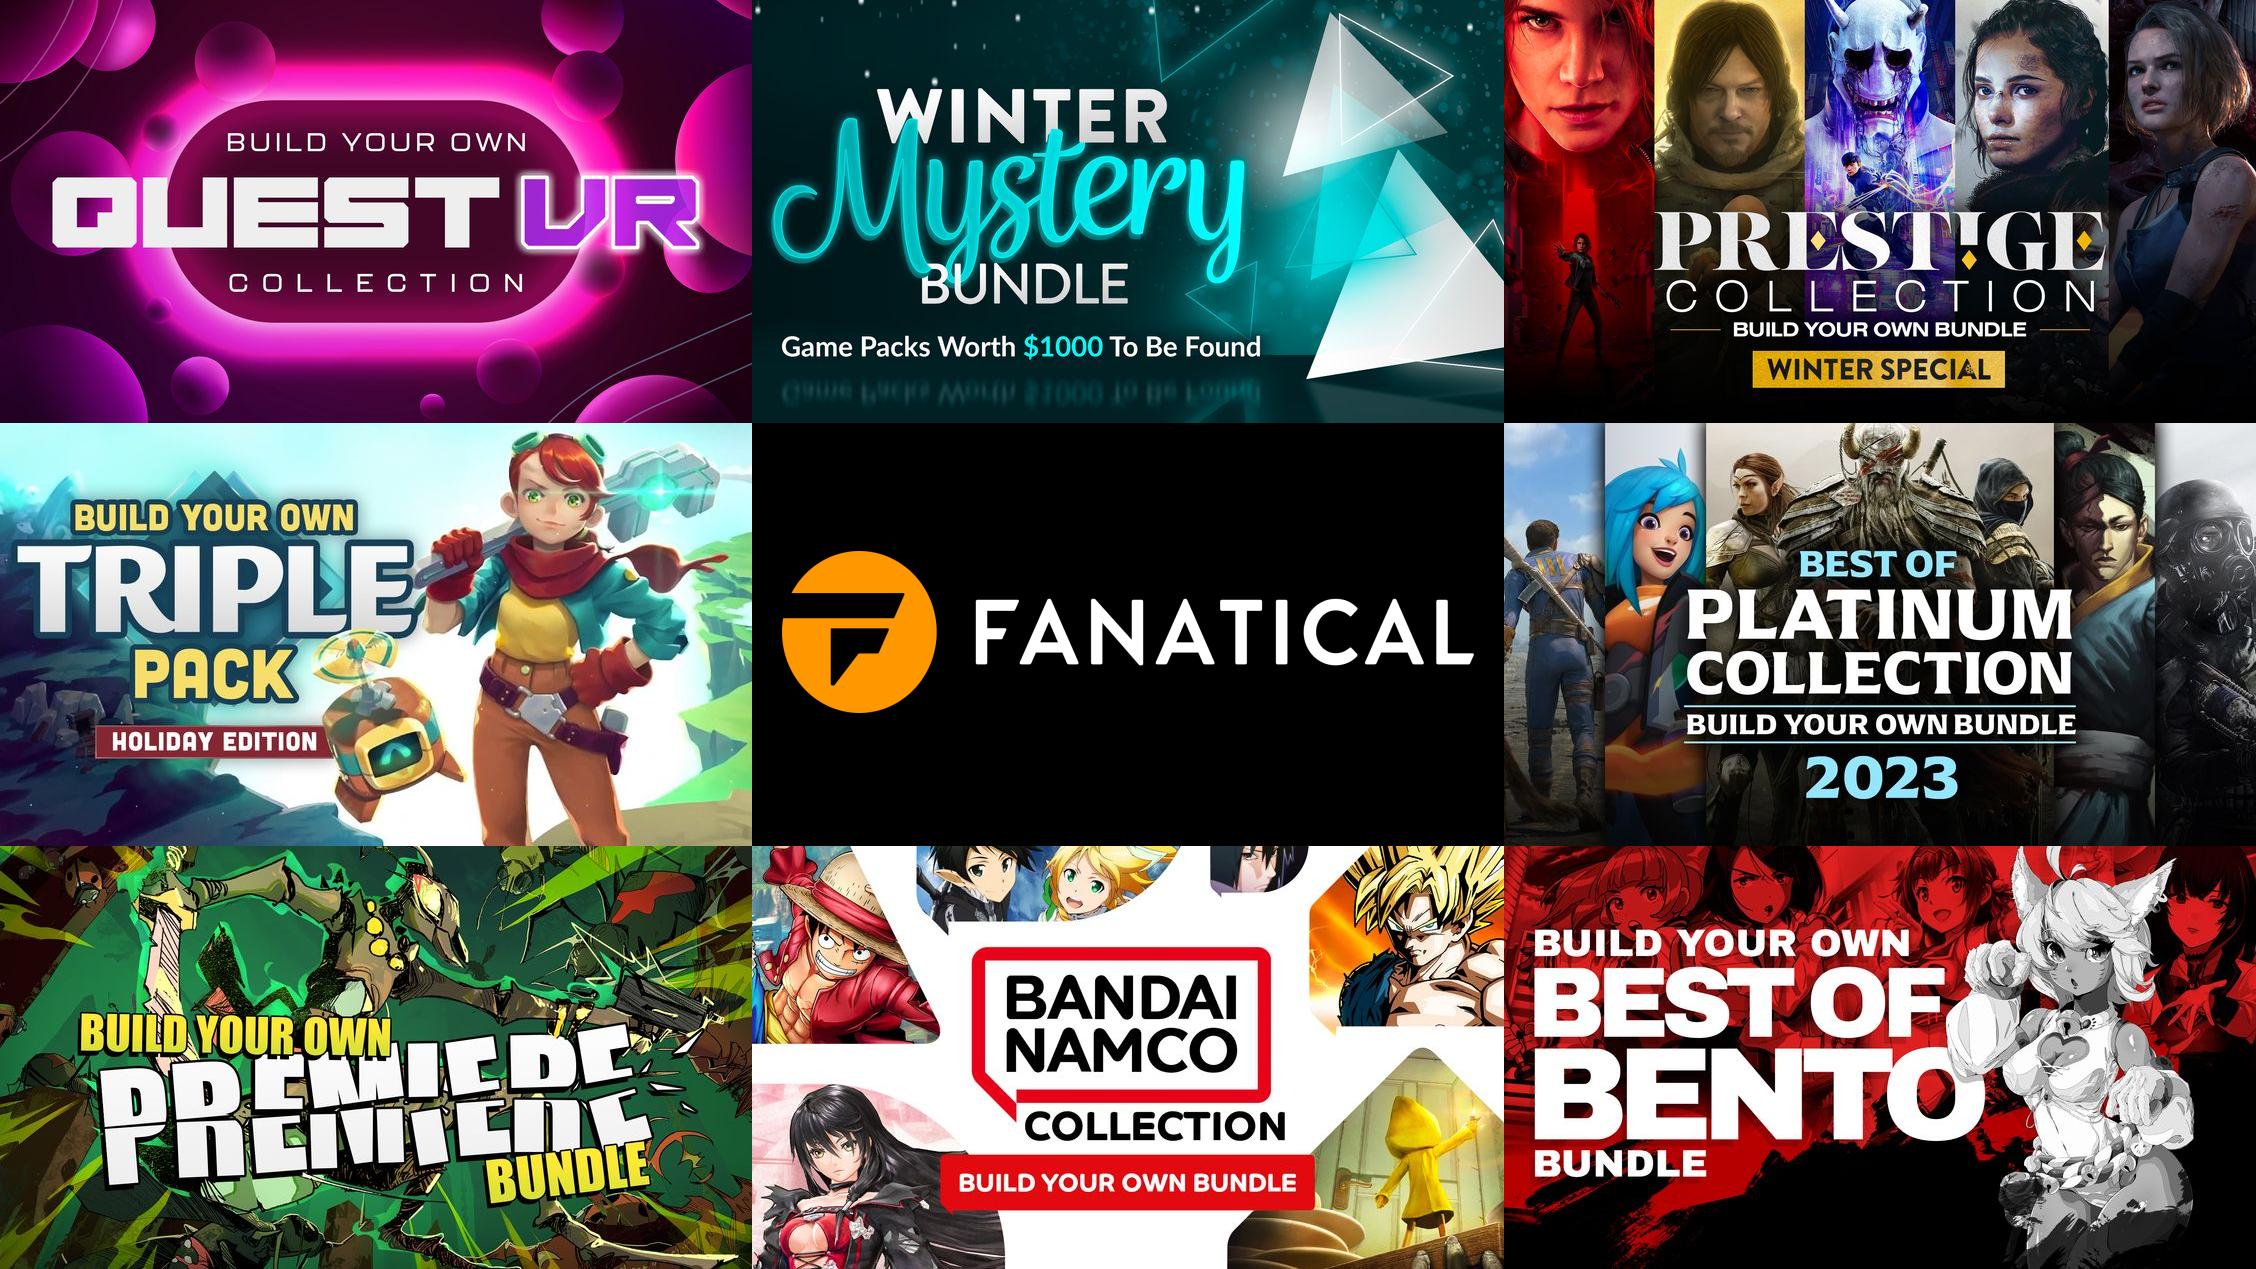 Bandai Namco Collection - Build your own Bundle